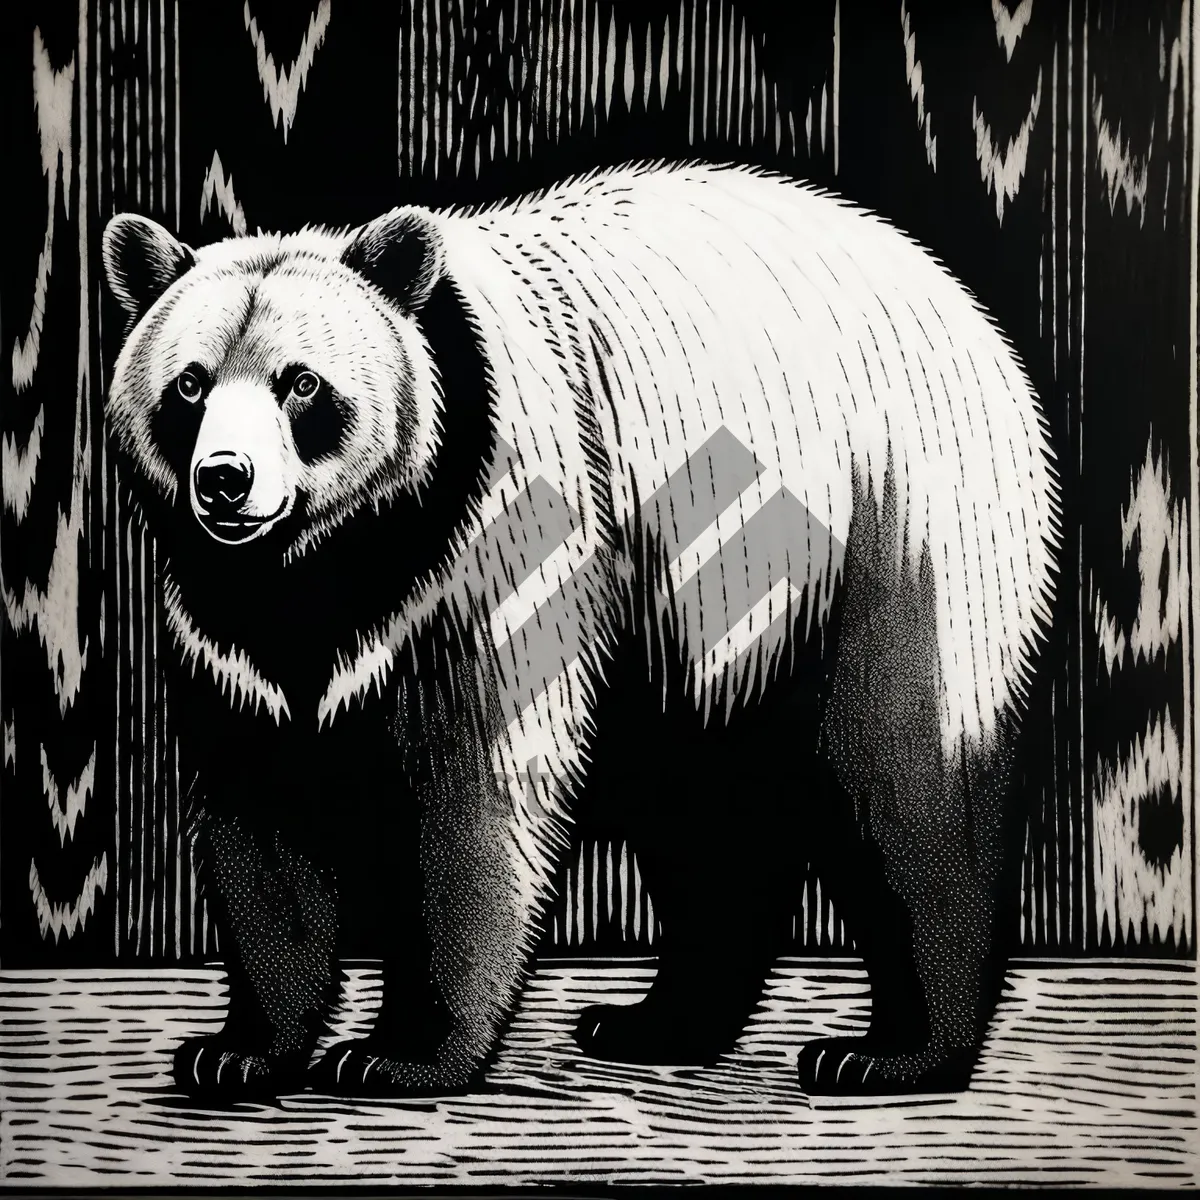 Picture of Endangered Giant Panda in Wild Habitat